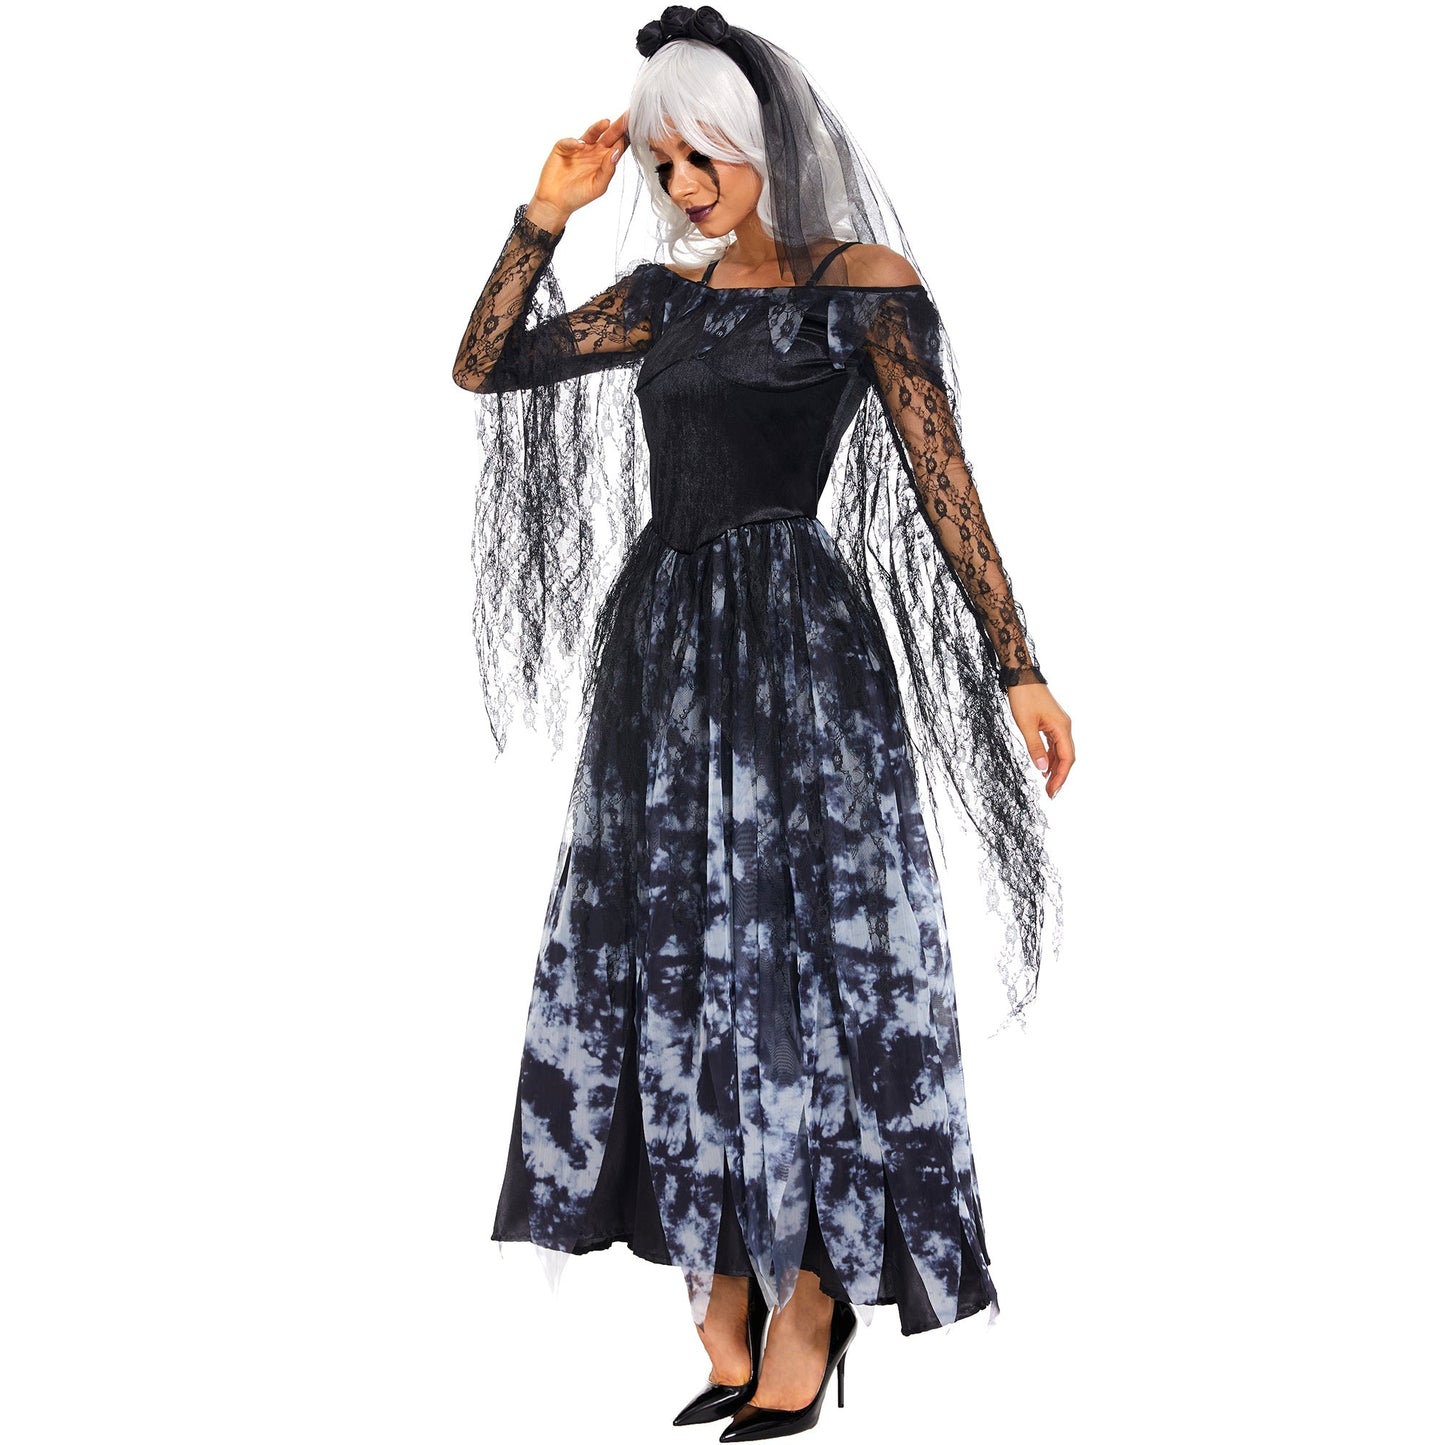 Halloween Costume Horror Zombie Bride Dress Vampire Zombie Witch Uniform